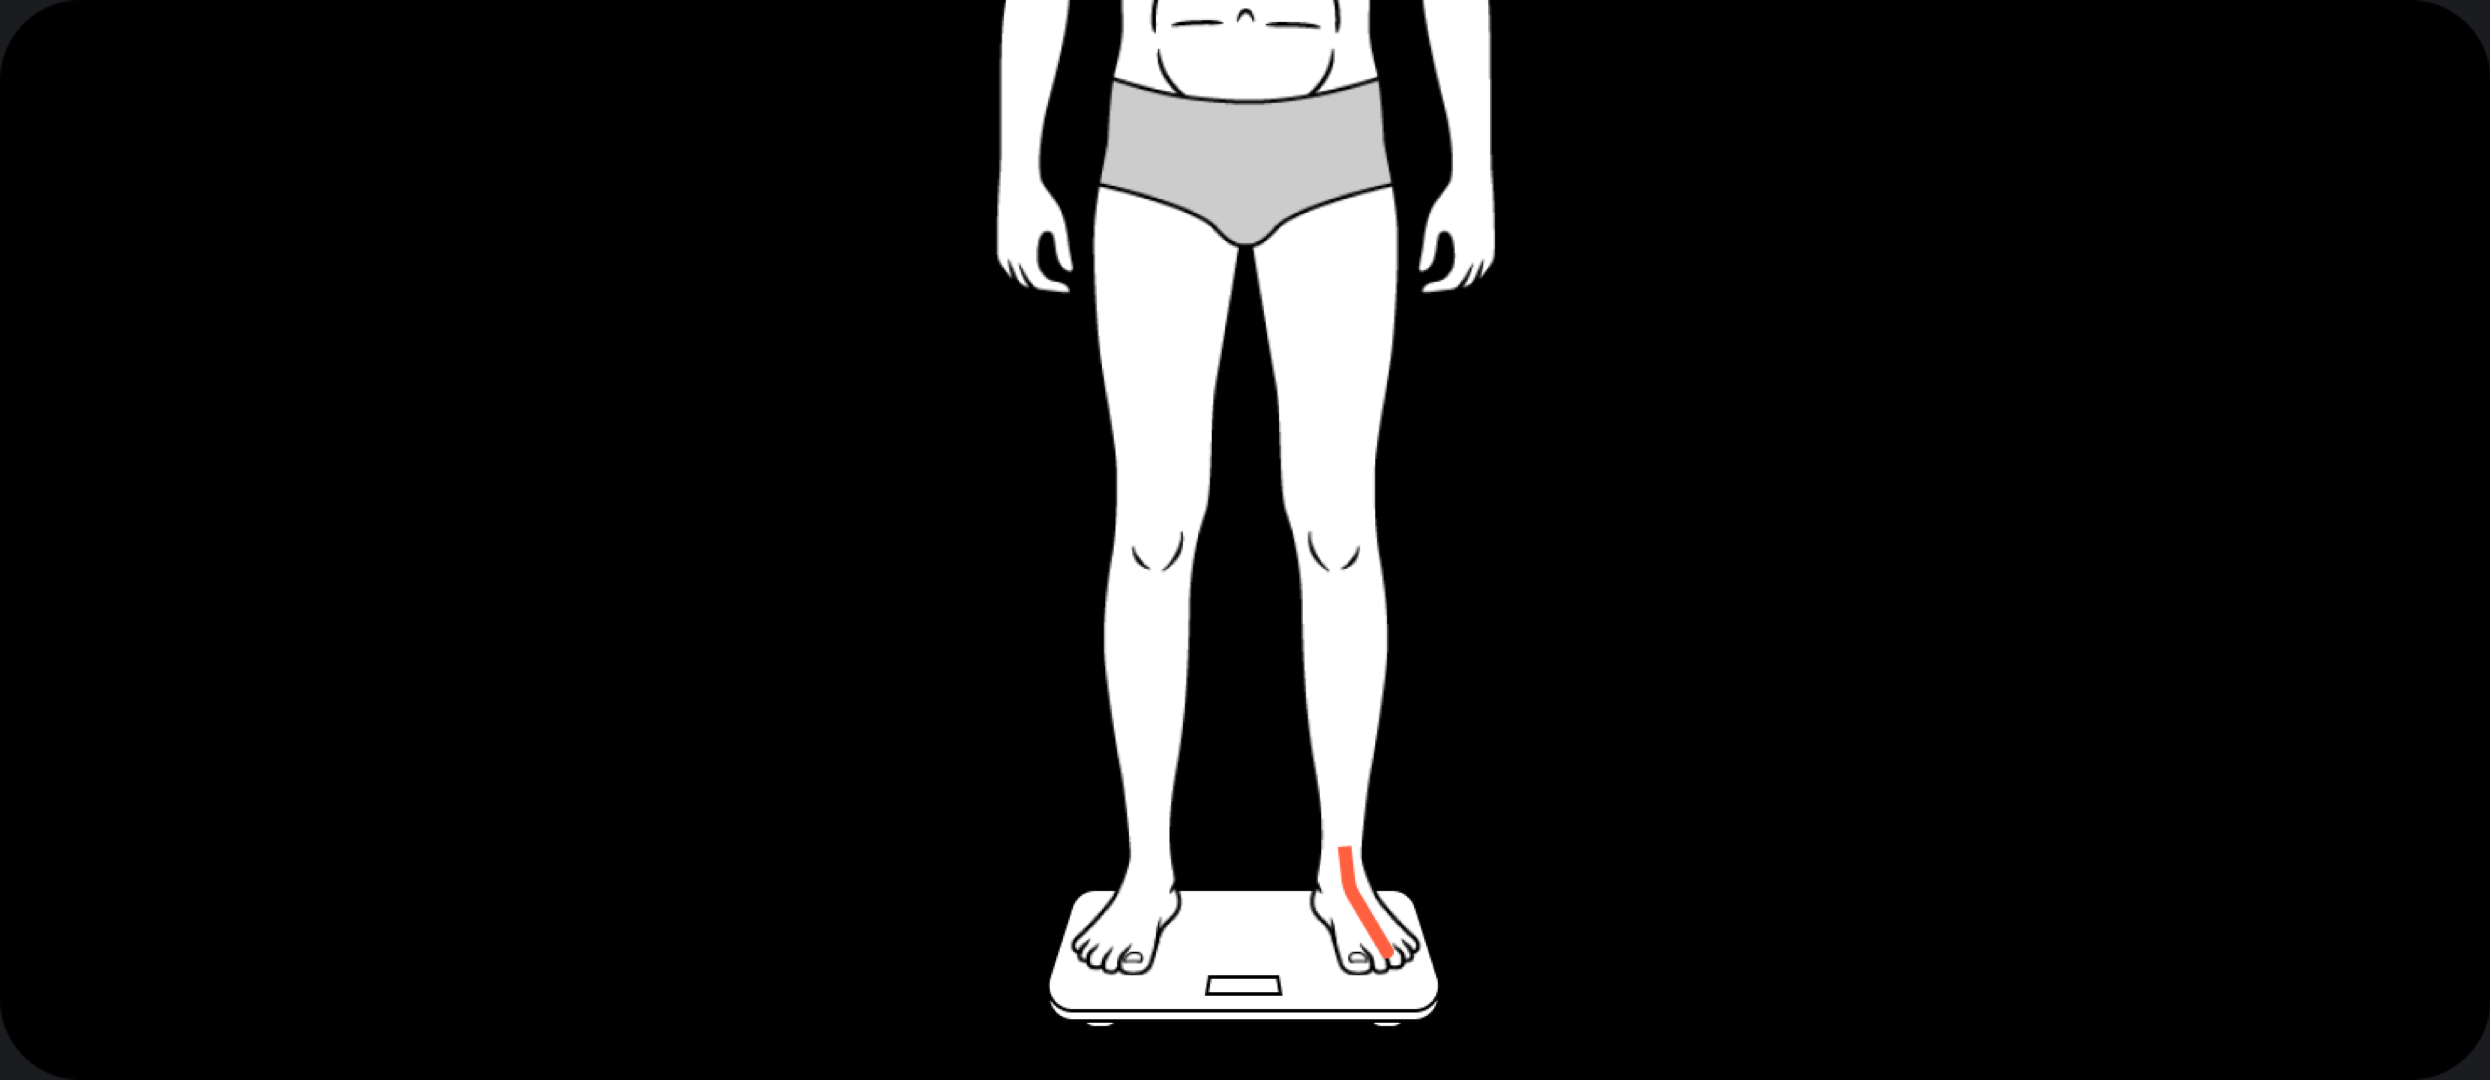 Aura Full Body Analysis Scale User Manual